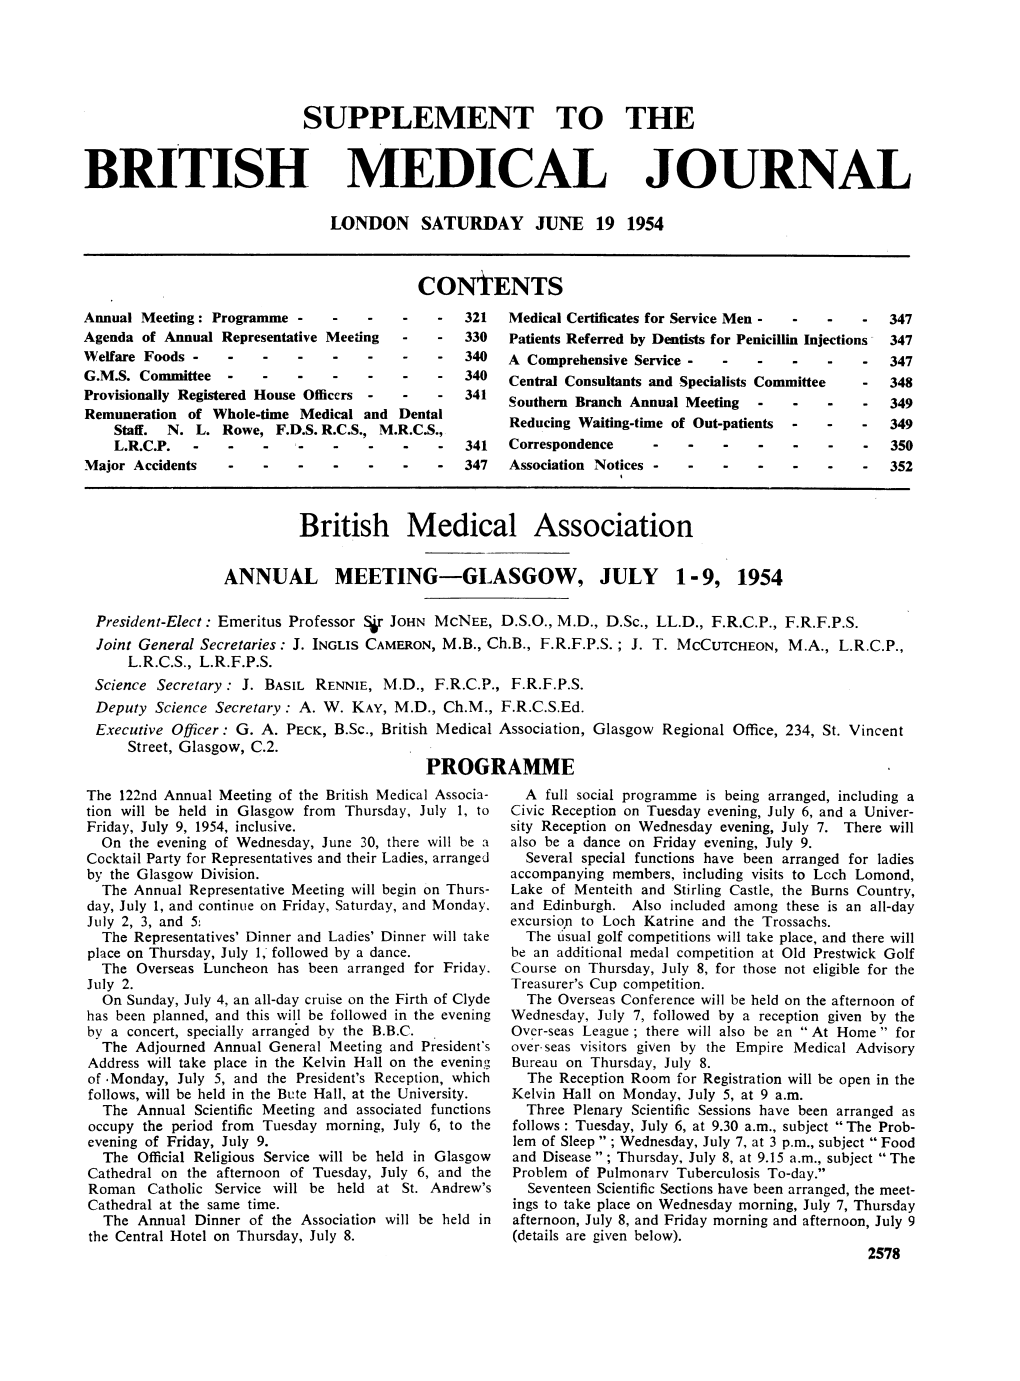 British Medical Association ANNUAL MEETING-GLASGOW, JULY 1- 9, 1954